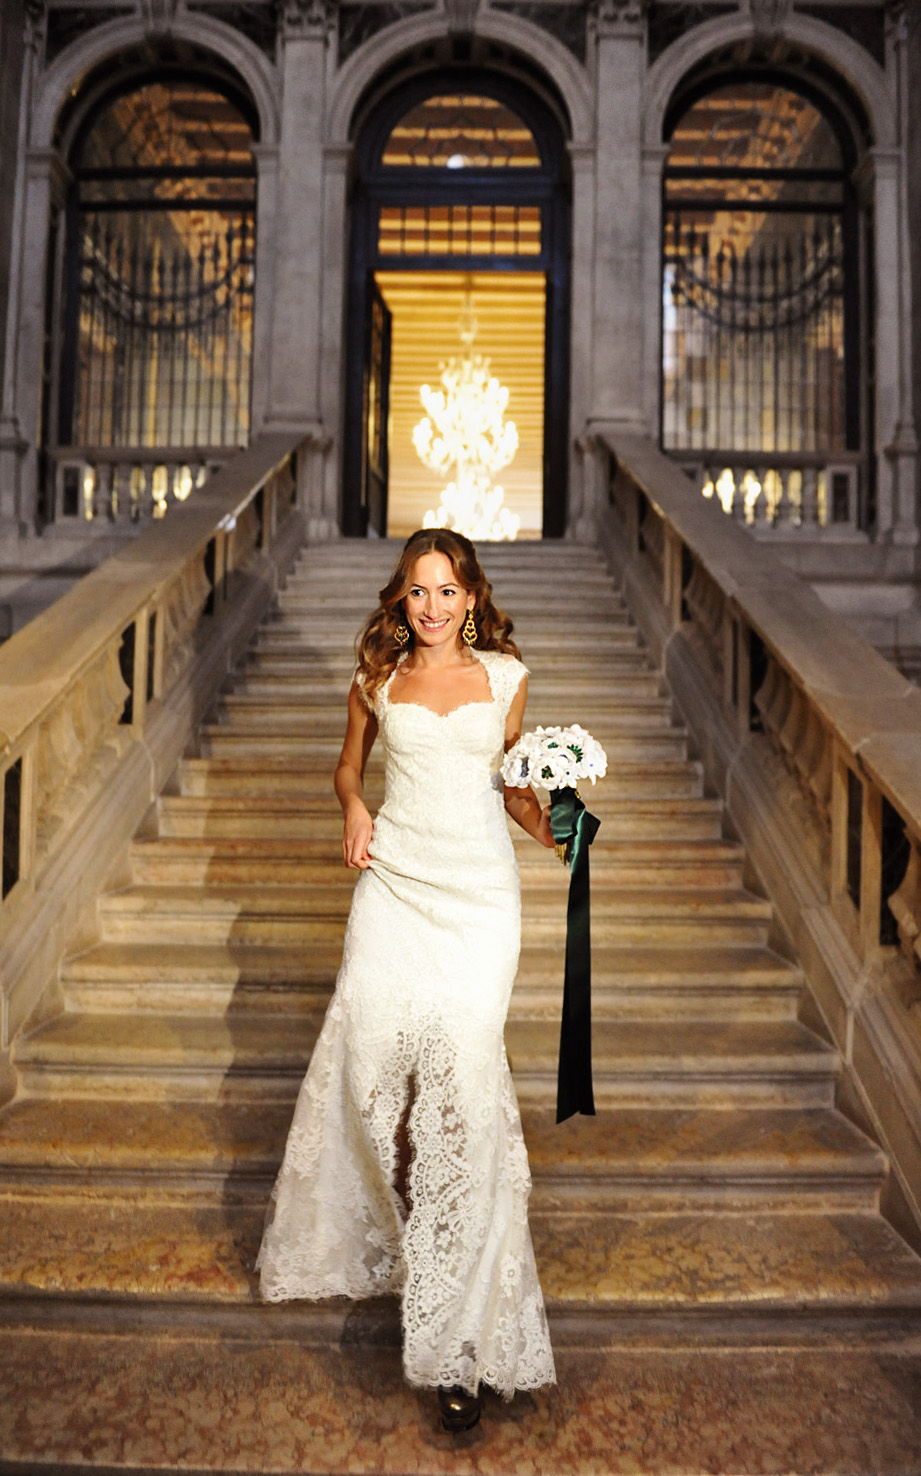 Moscha and Nikos Venice wedding in Italy at Ca' Sagredo Hotel, photographed by wedding photographer Venice XOANDREA